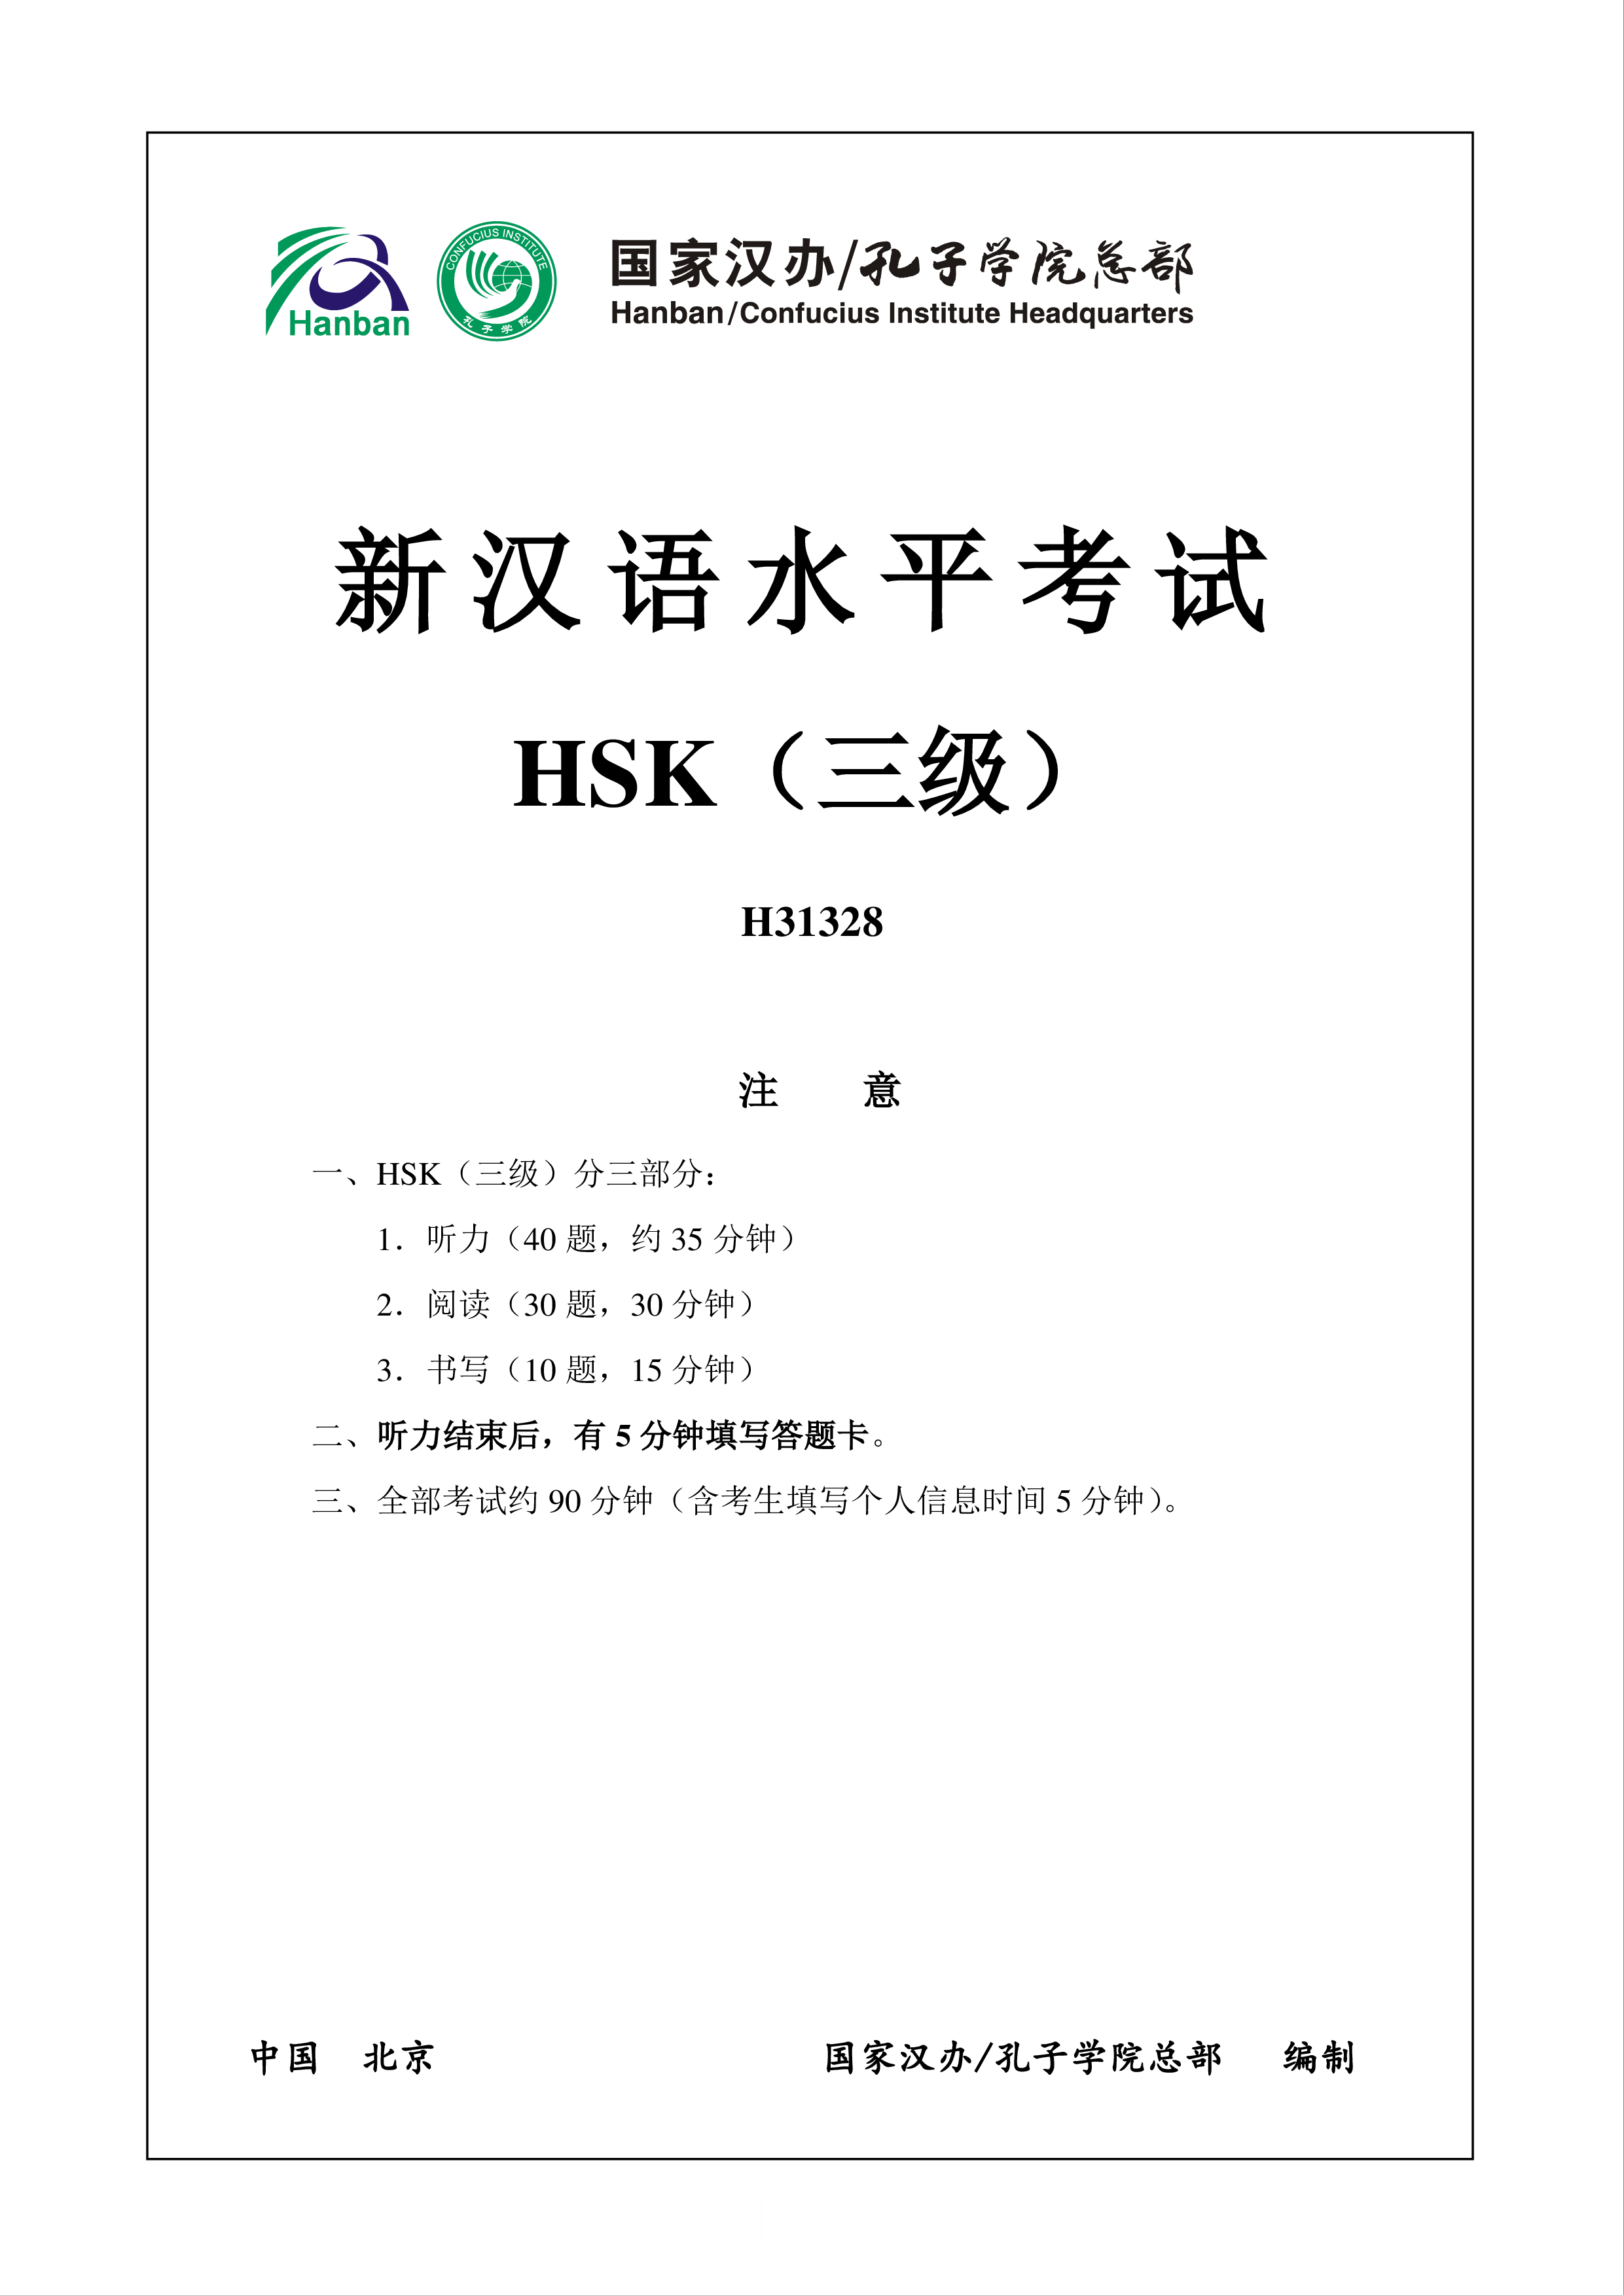 hsk3 h31328 exam template